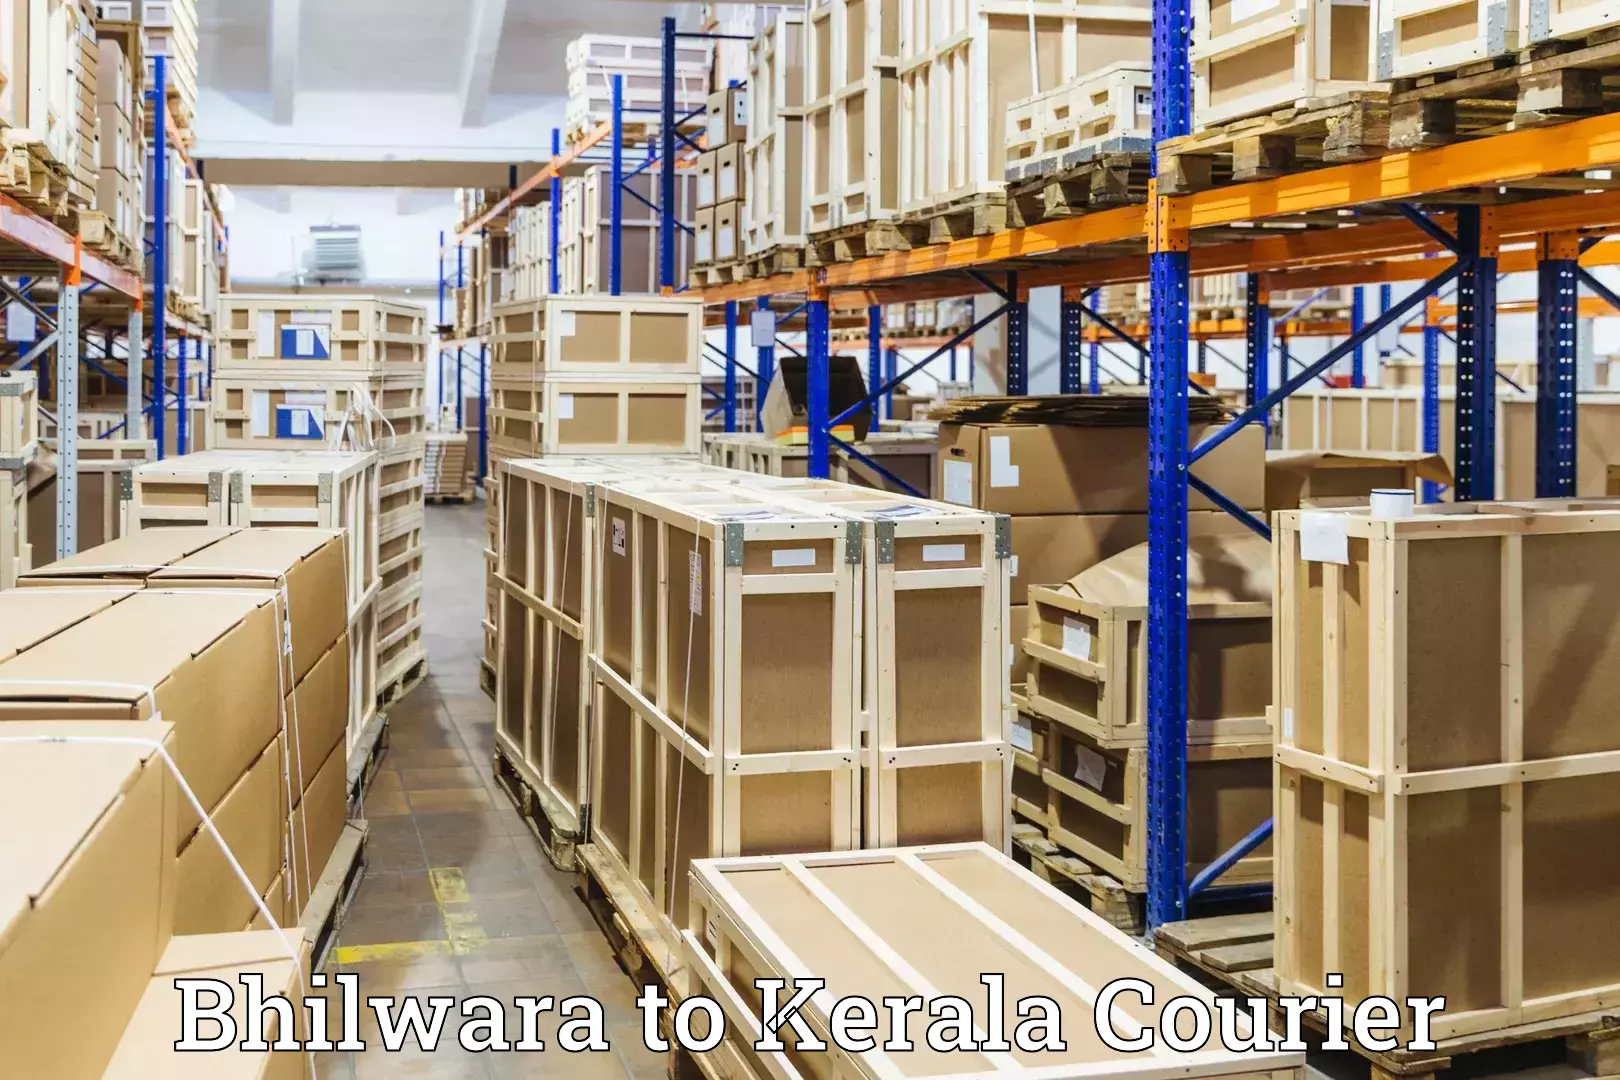 Luggage delivery app Bhilwara to Kerala